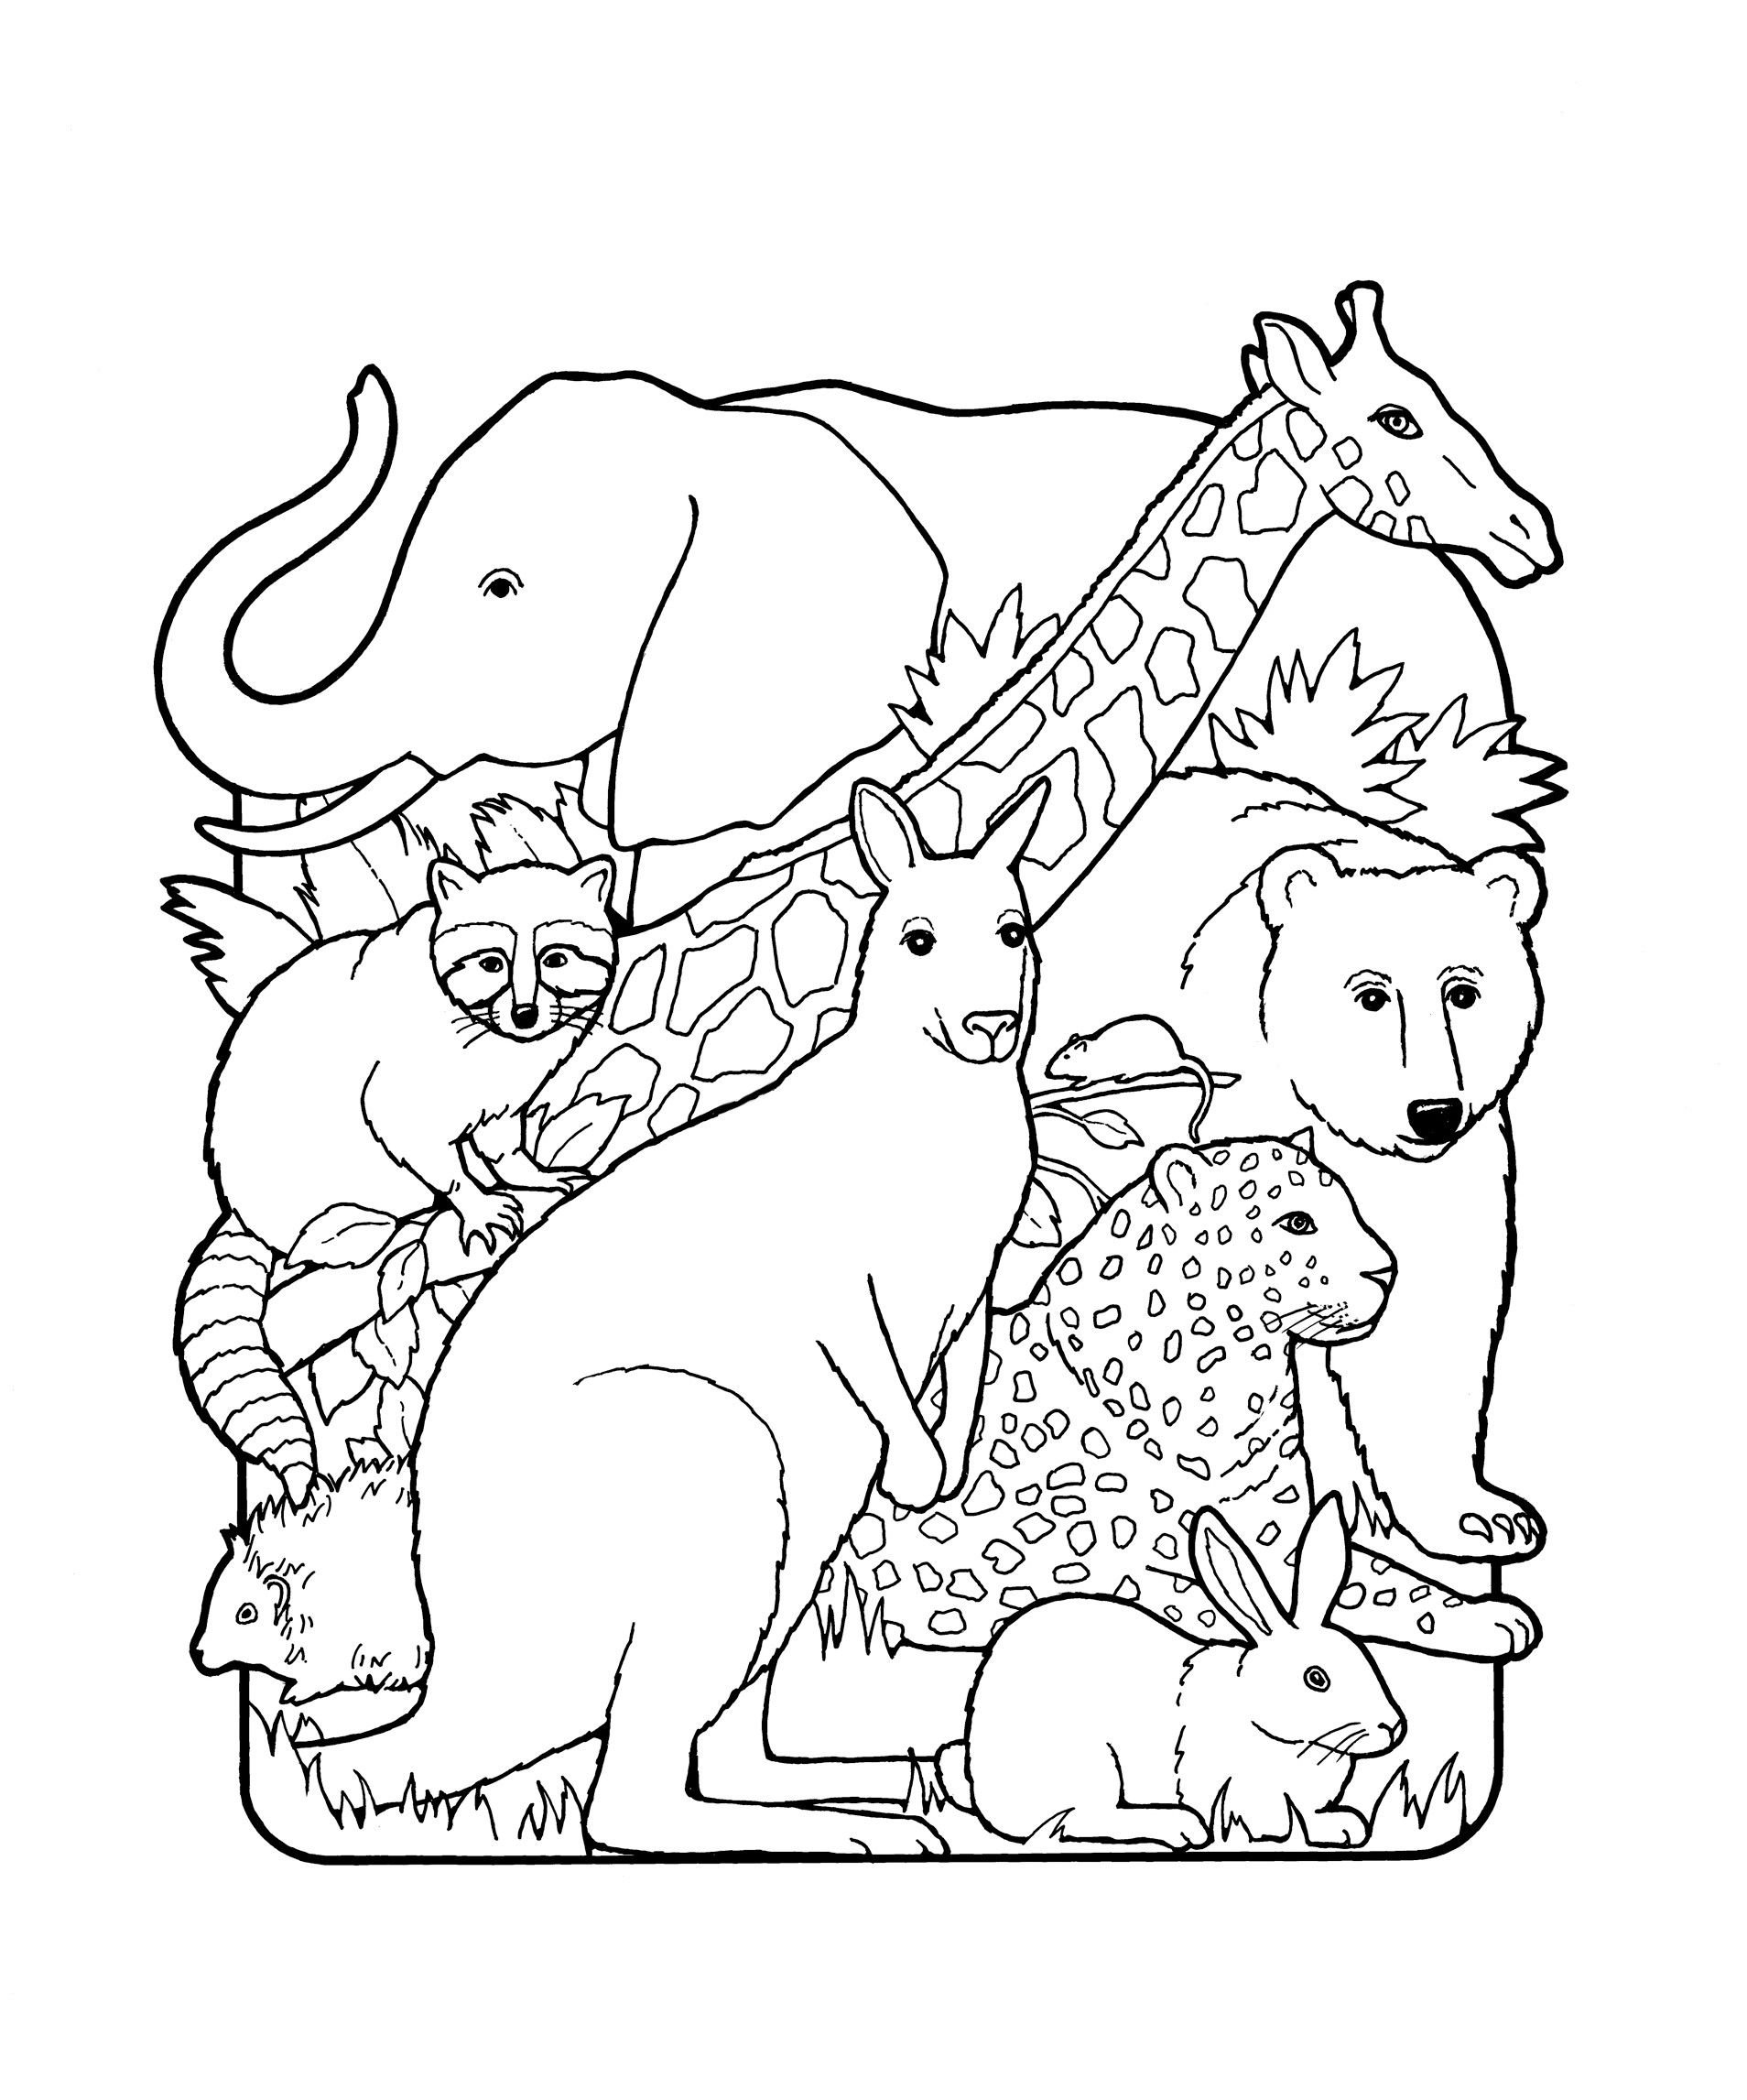 An illustration of various animals.